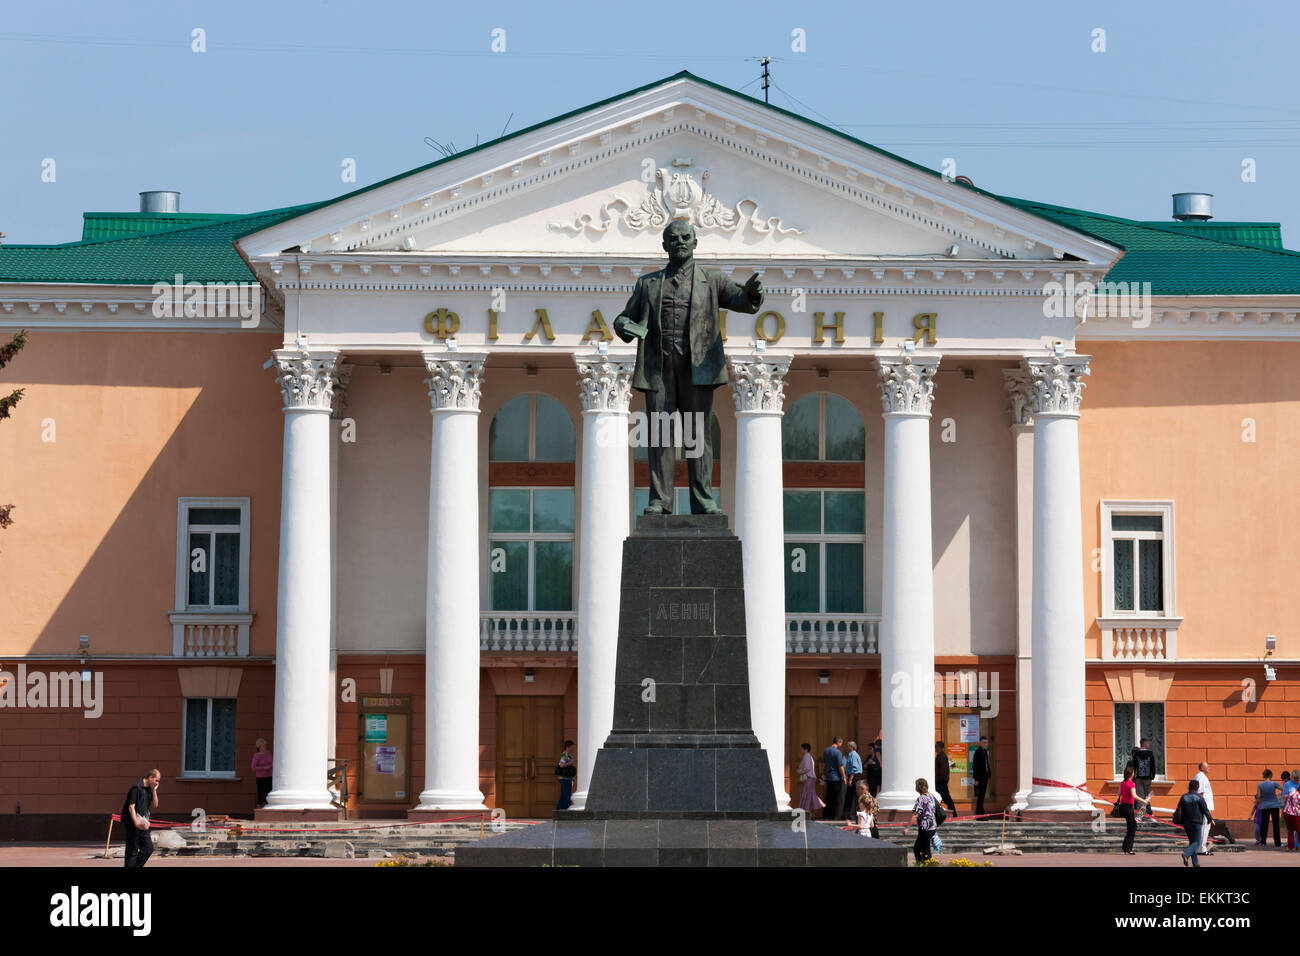 Lenin statue in front of a theater, Minsk, Belarus Stock Photo